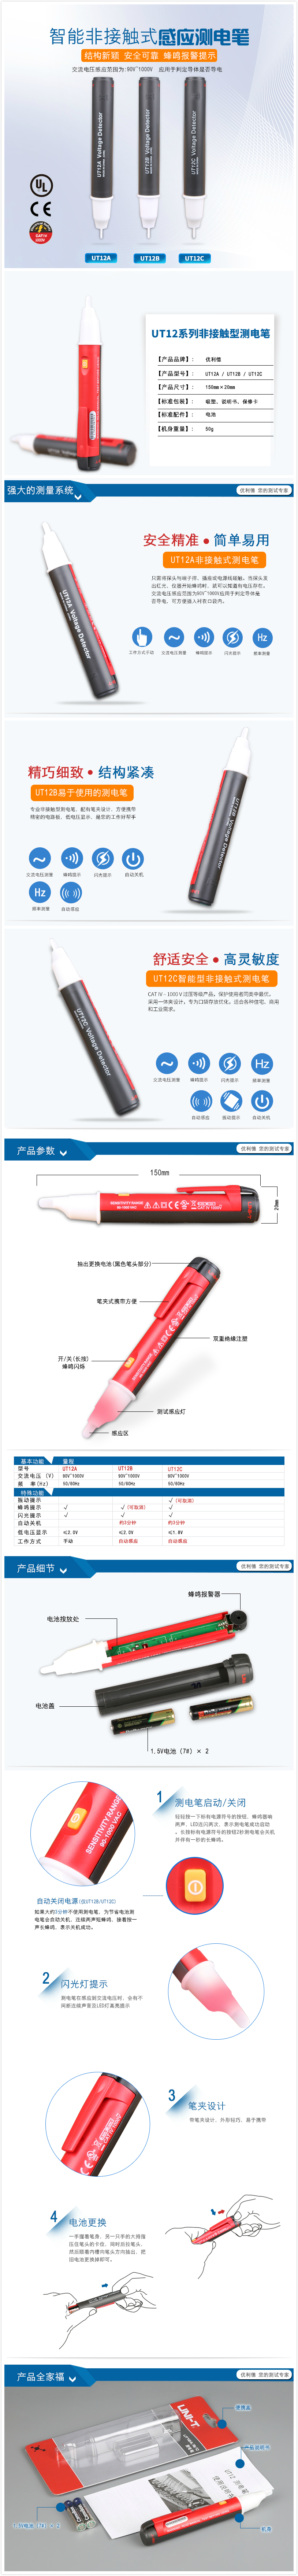 UT12系列测电笔:相关图像